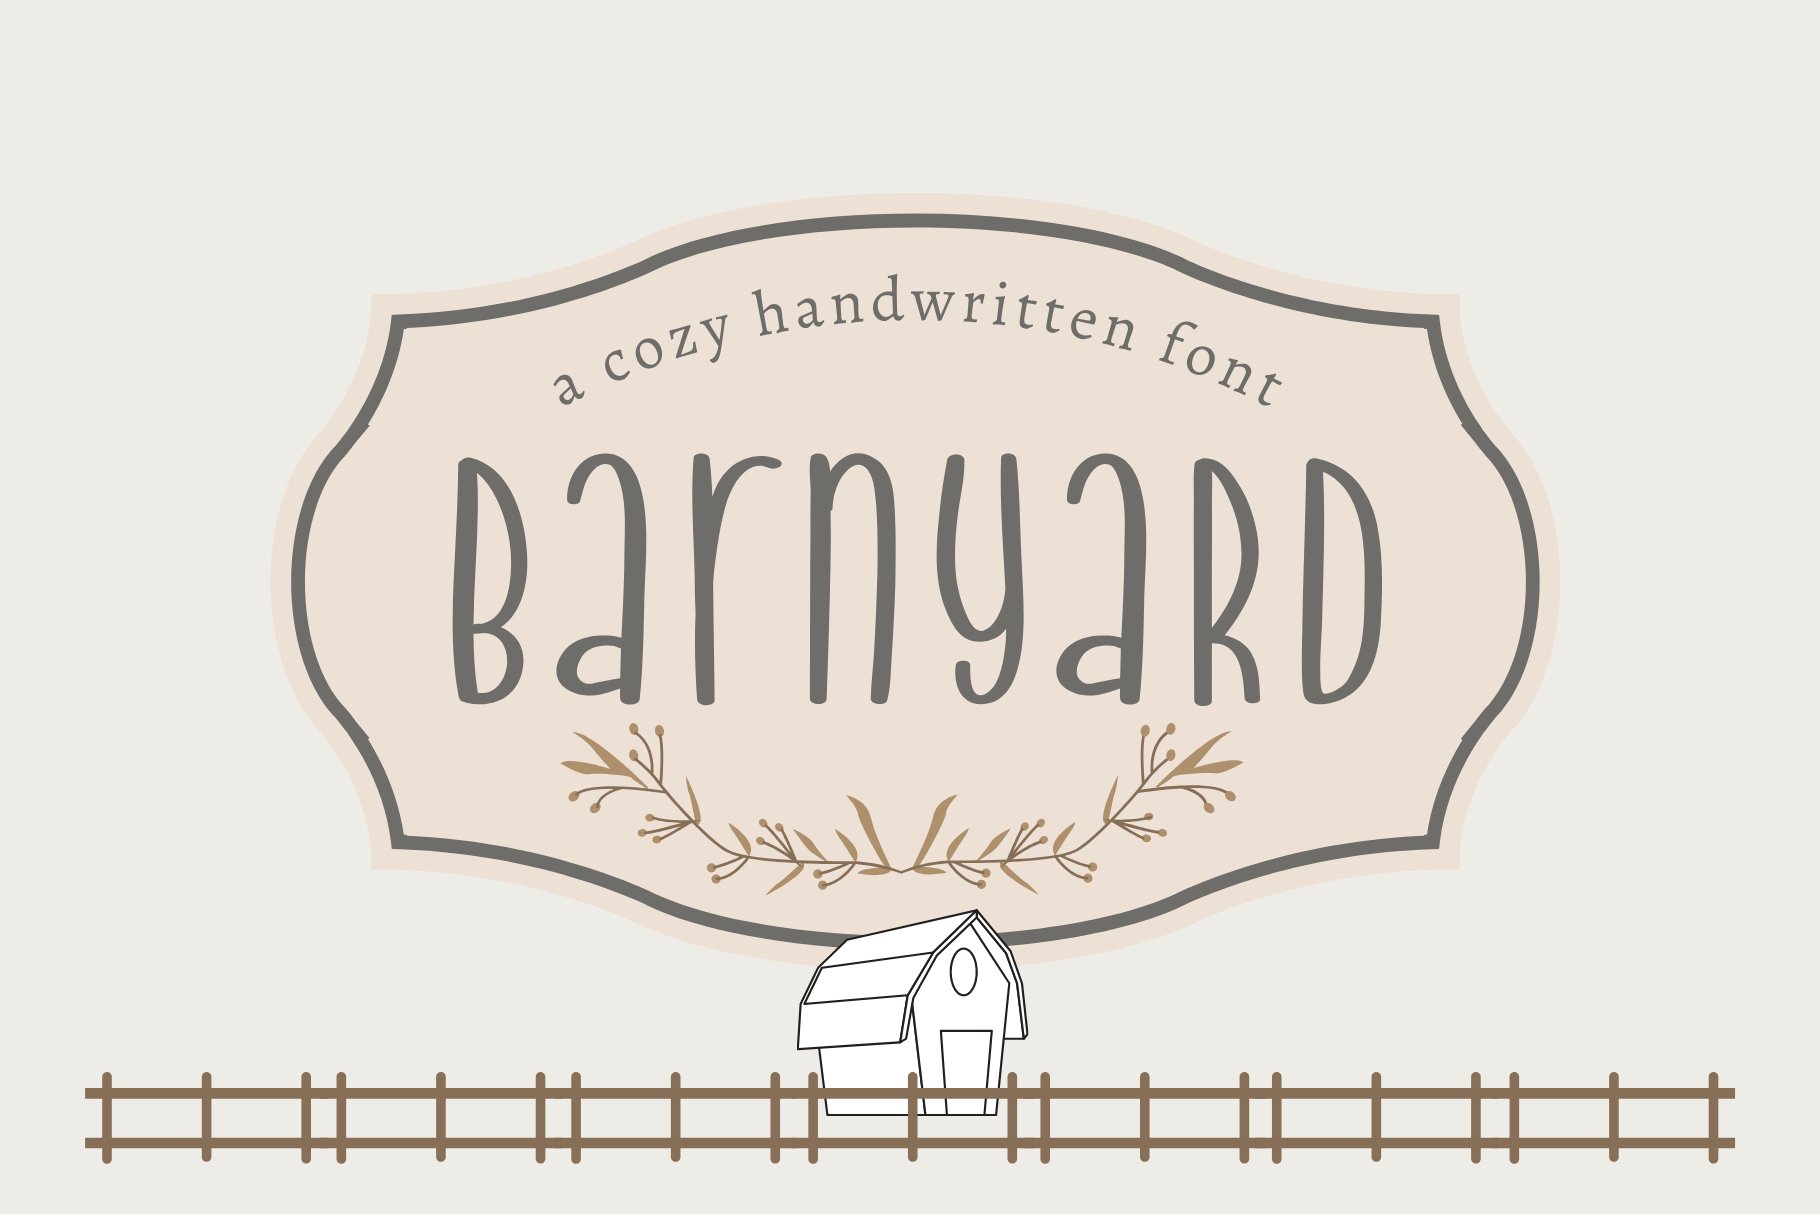 Barnyard Handwritten Font cover image.